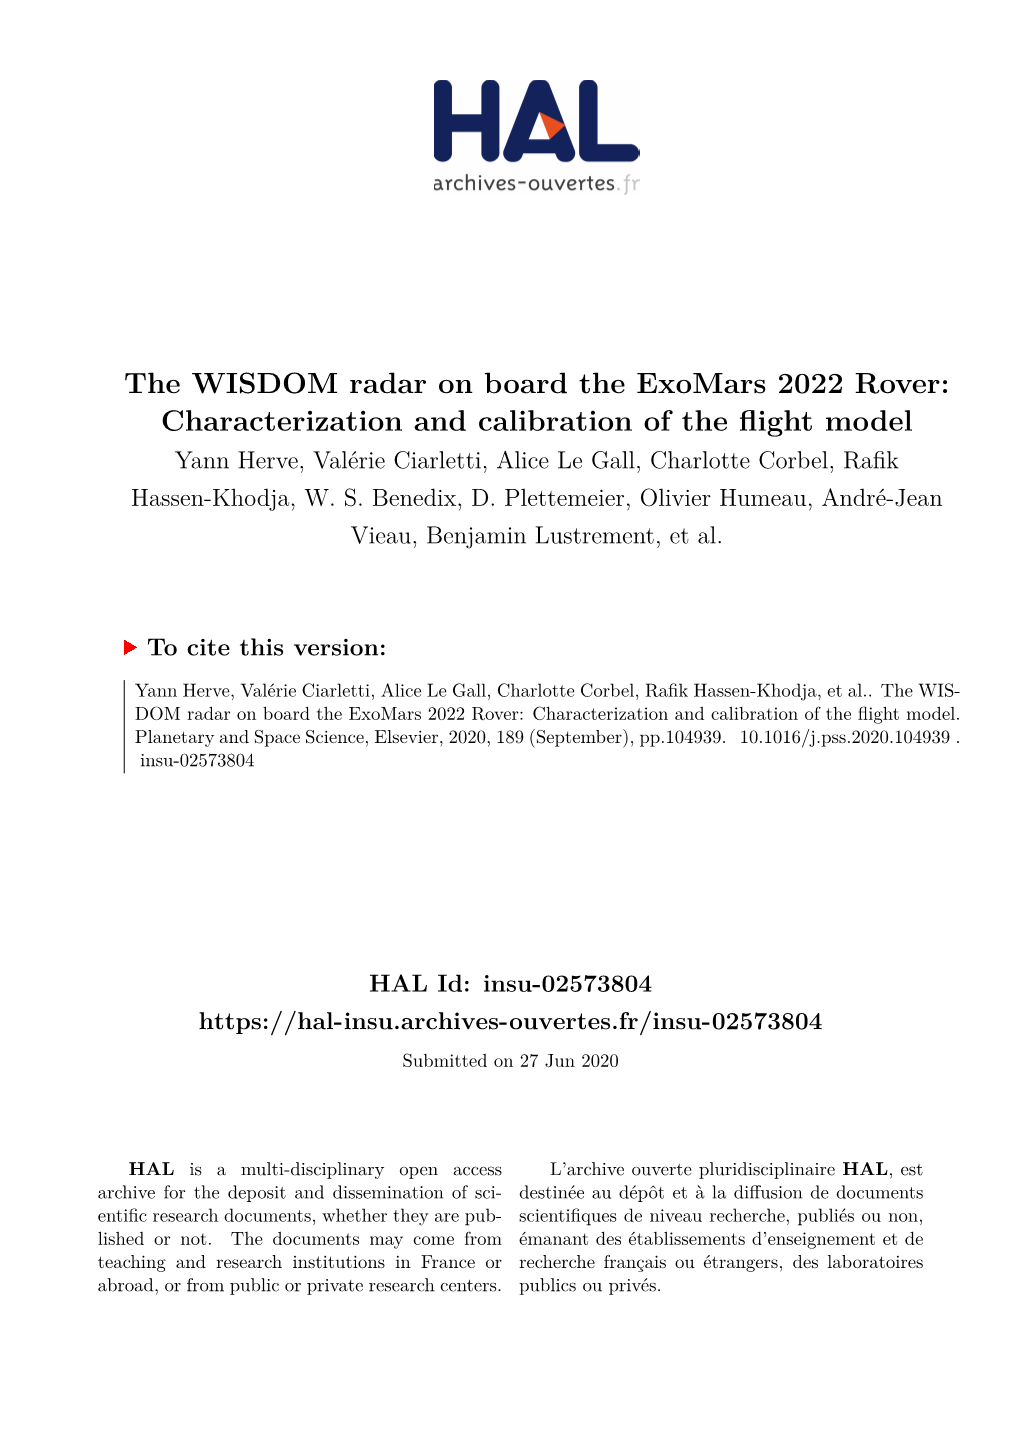 The WISDOM Radar on Board the Exomars 2022 Rover